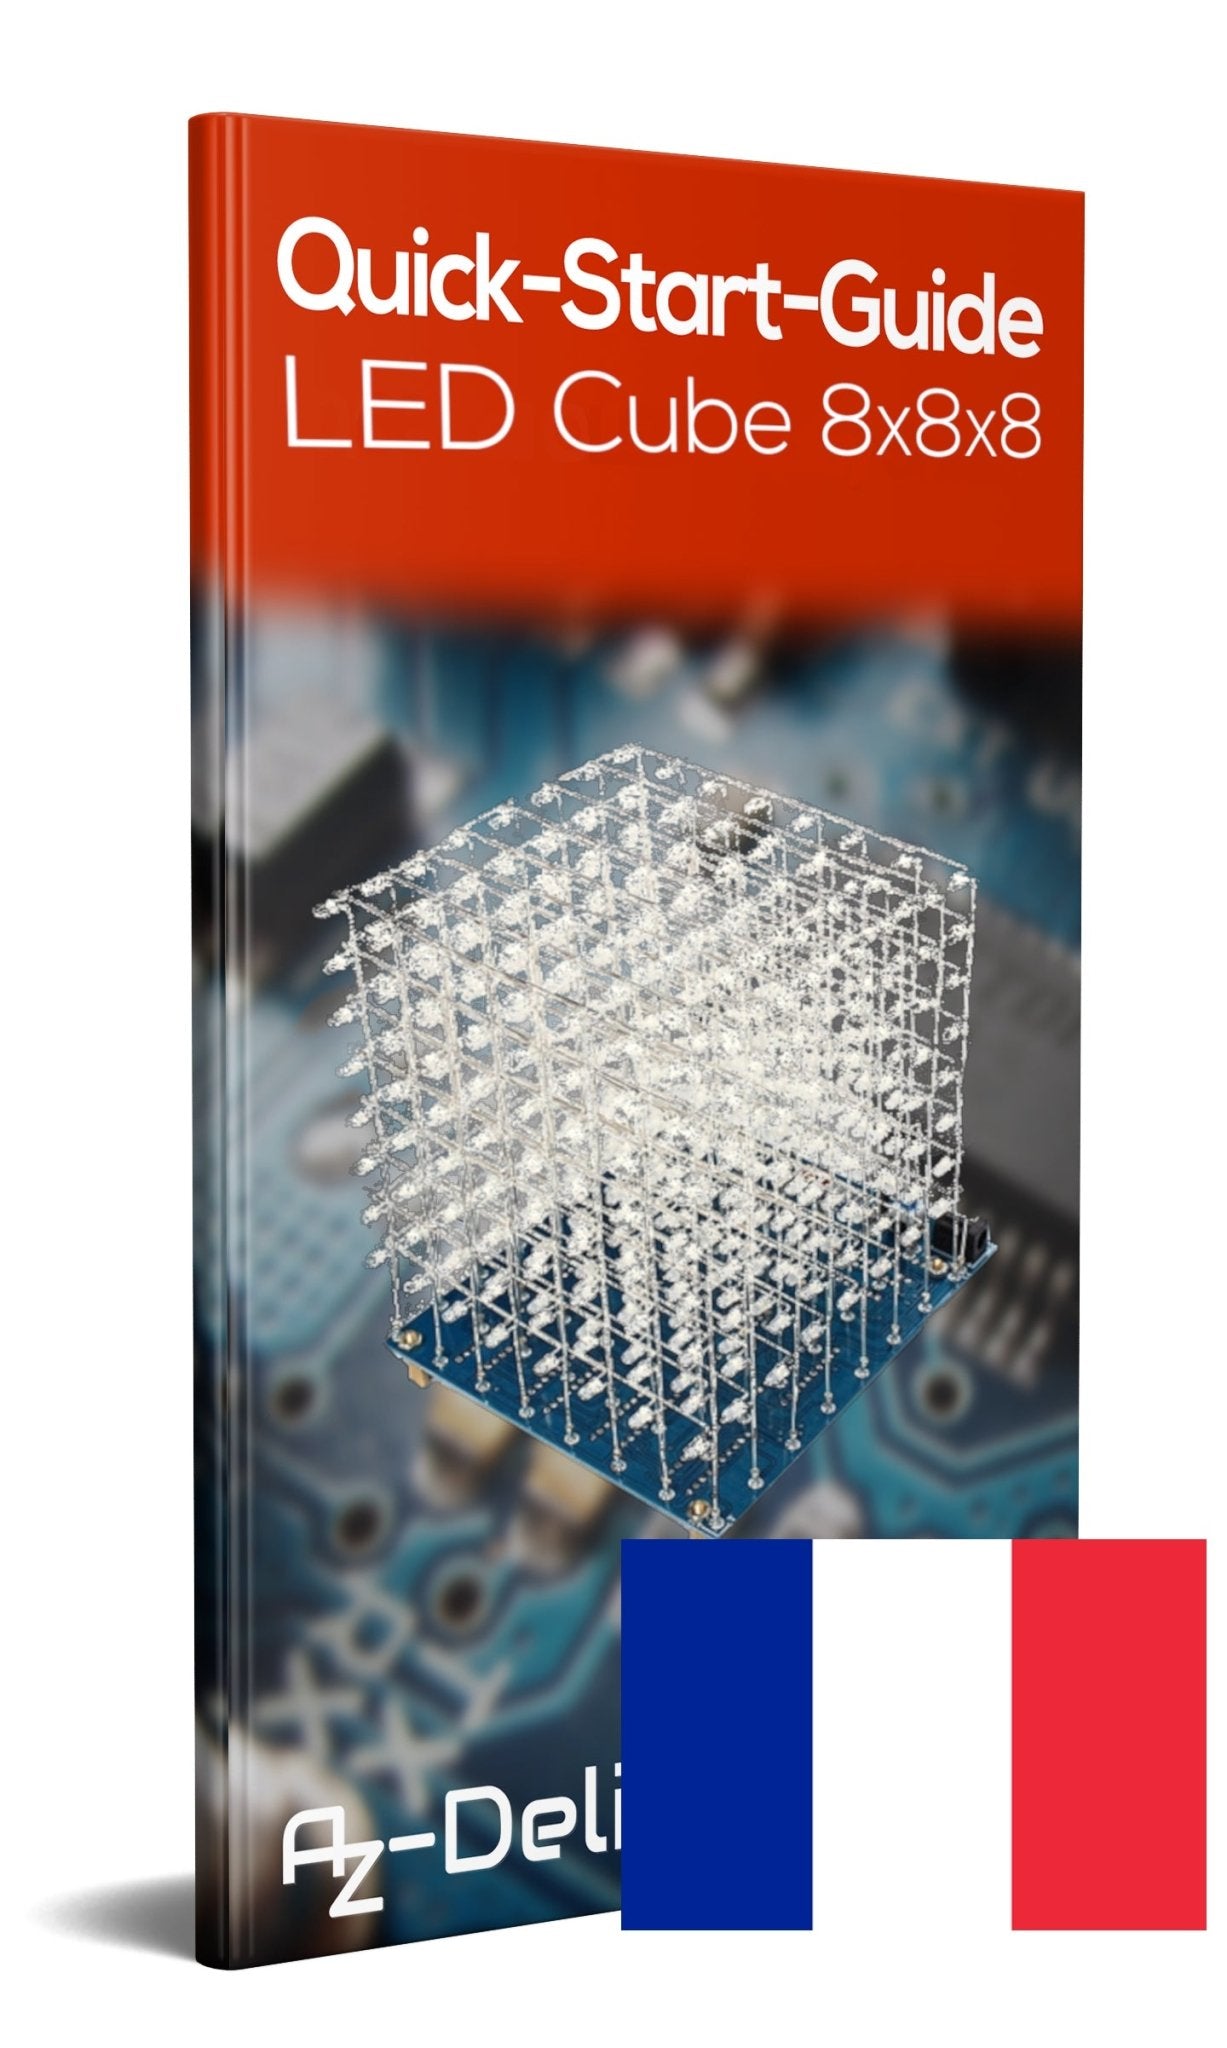 3D LED Cube 8x8x8 Light Matrix cube kit for soldering